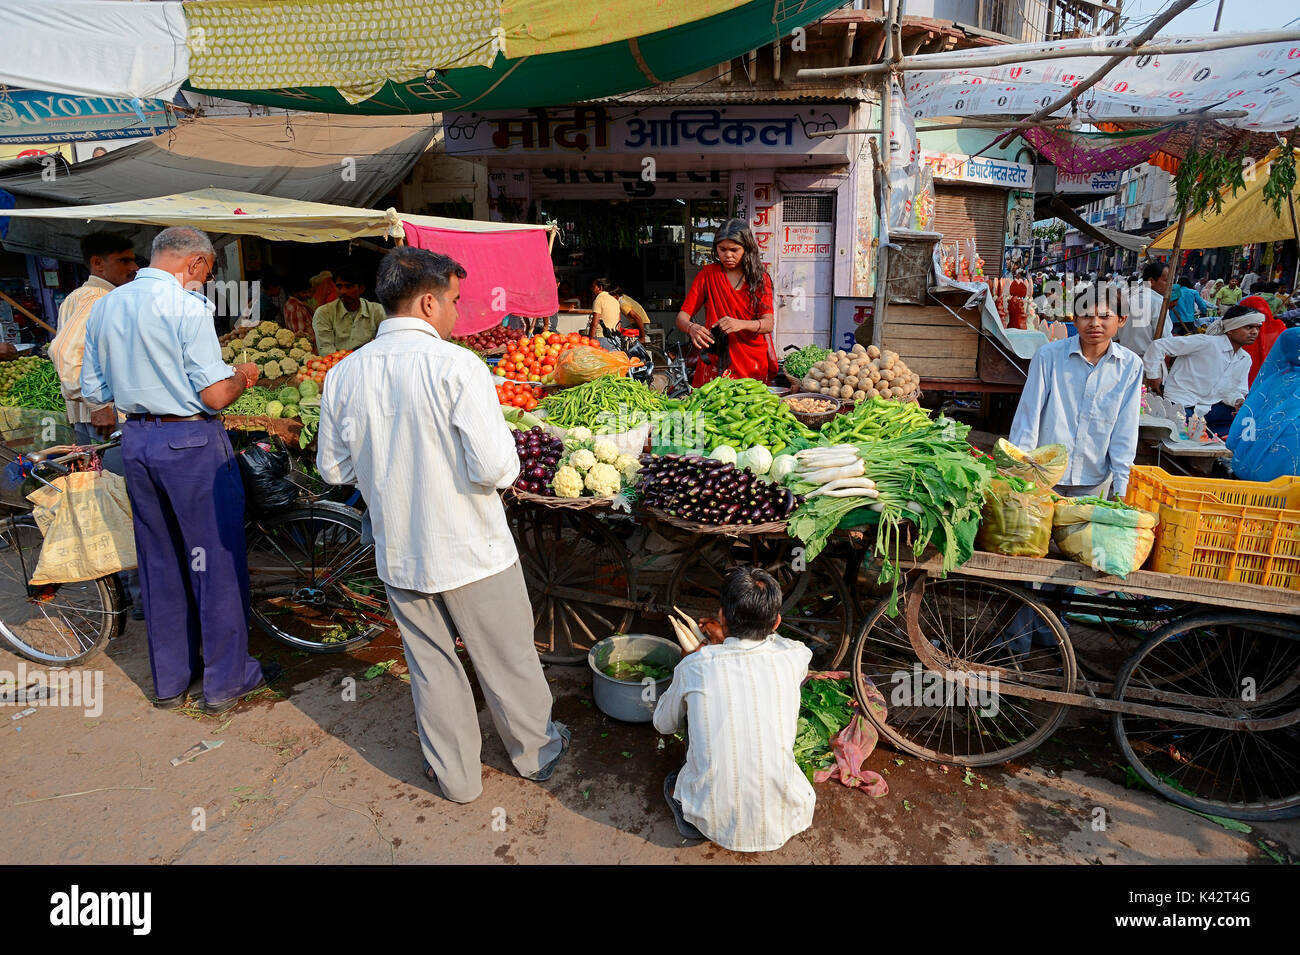 Décrochage du marché aux légumes, Bharatpur, Rajasthan, Inde | Marktstand mit Gemuese, Bharatpur, Rajasthan, Indien Banque D'Images